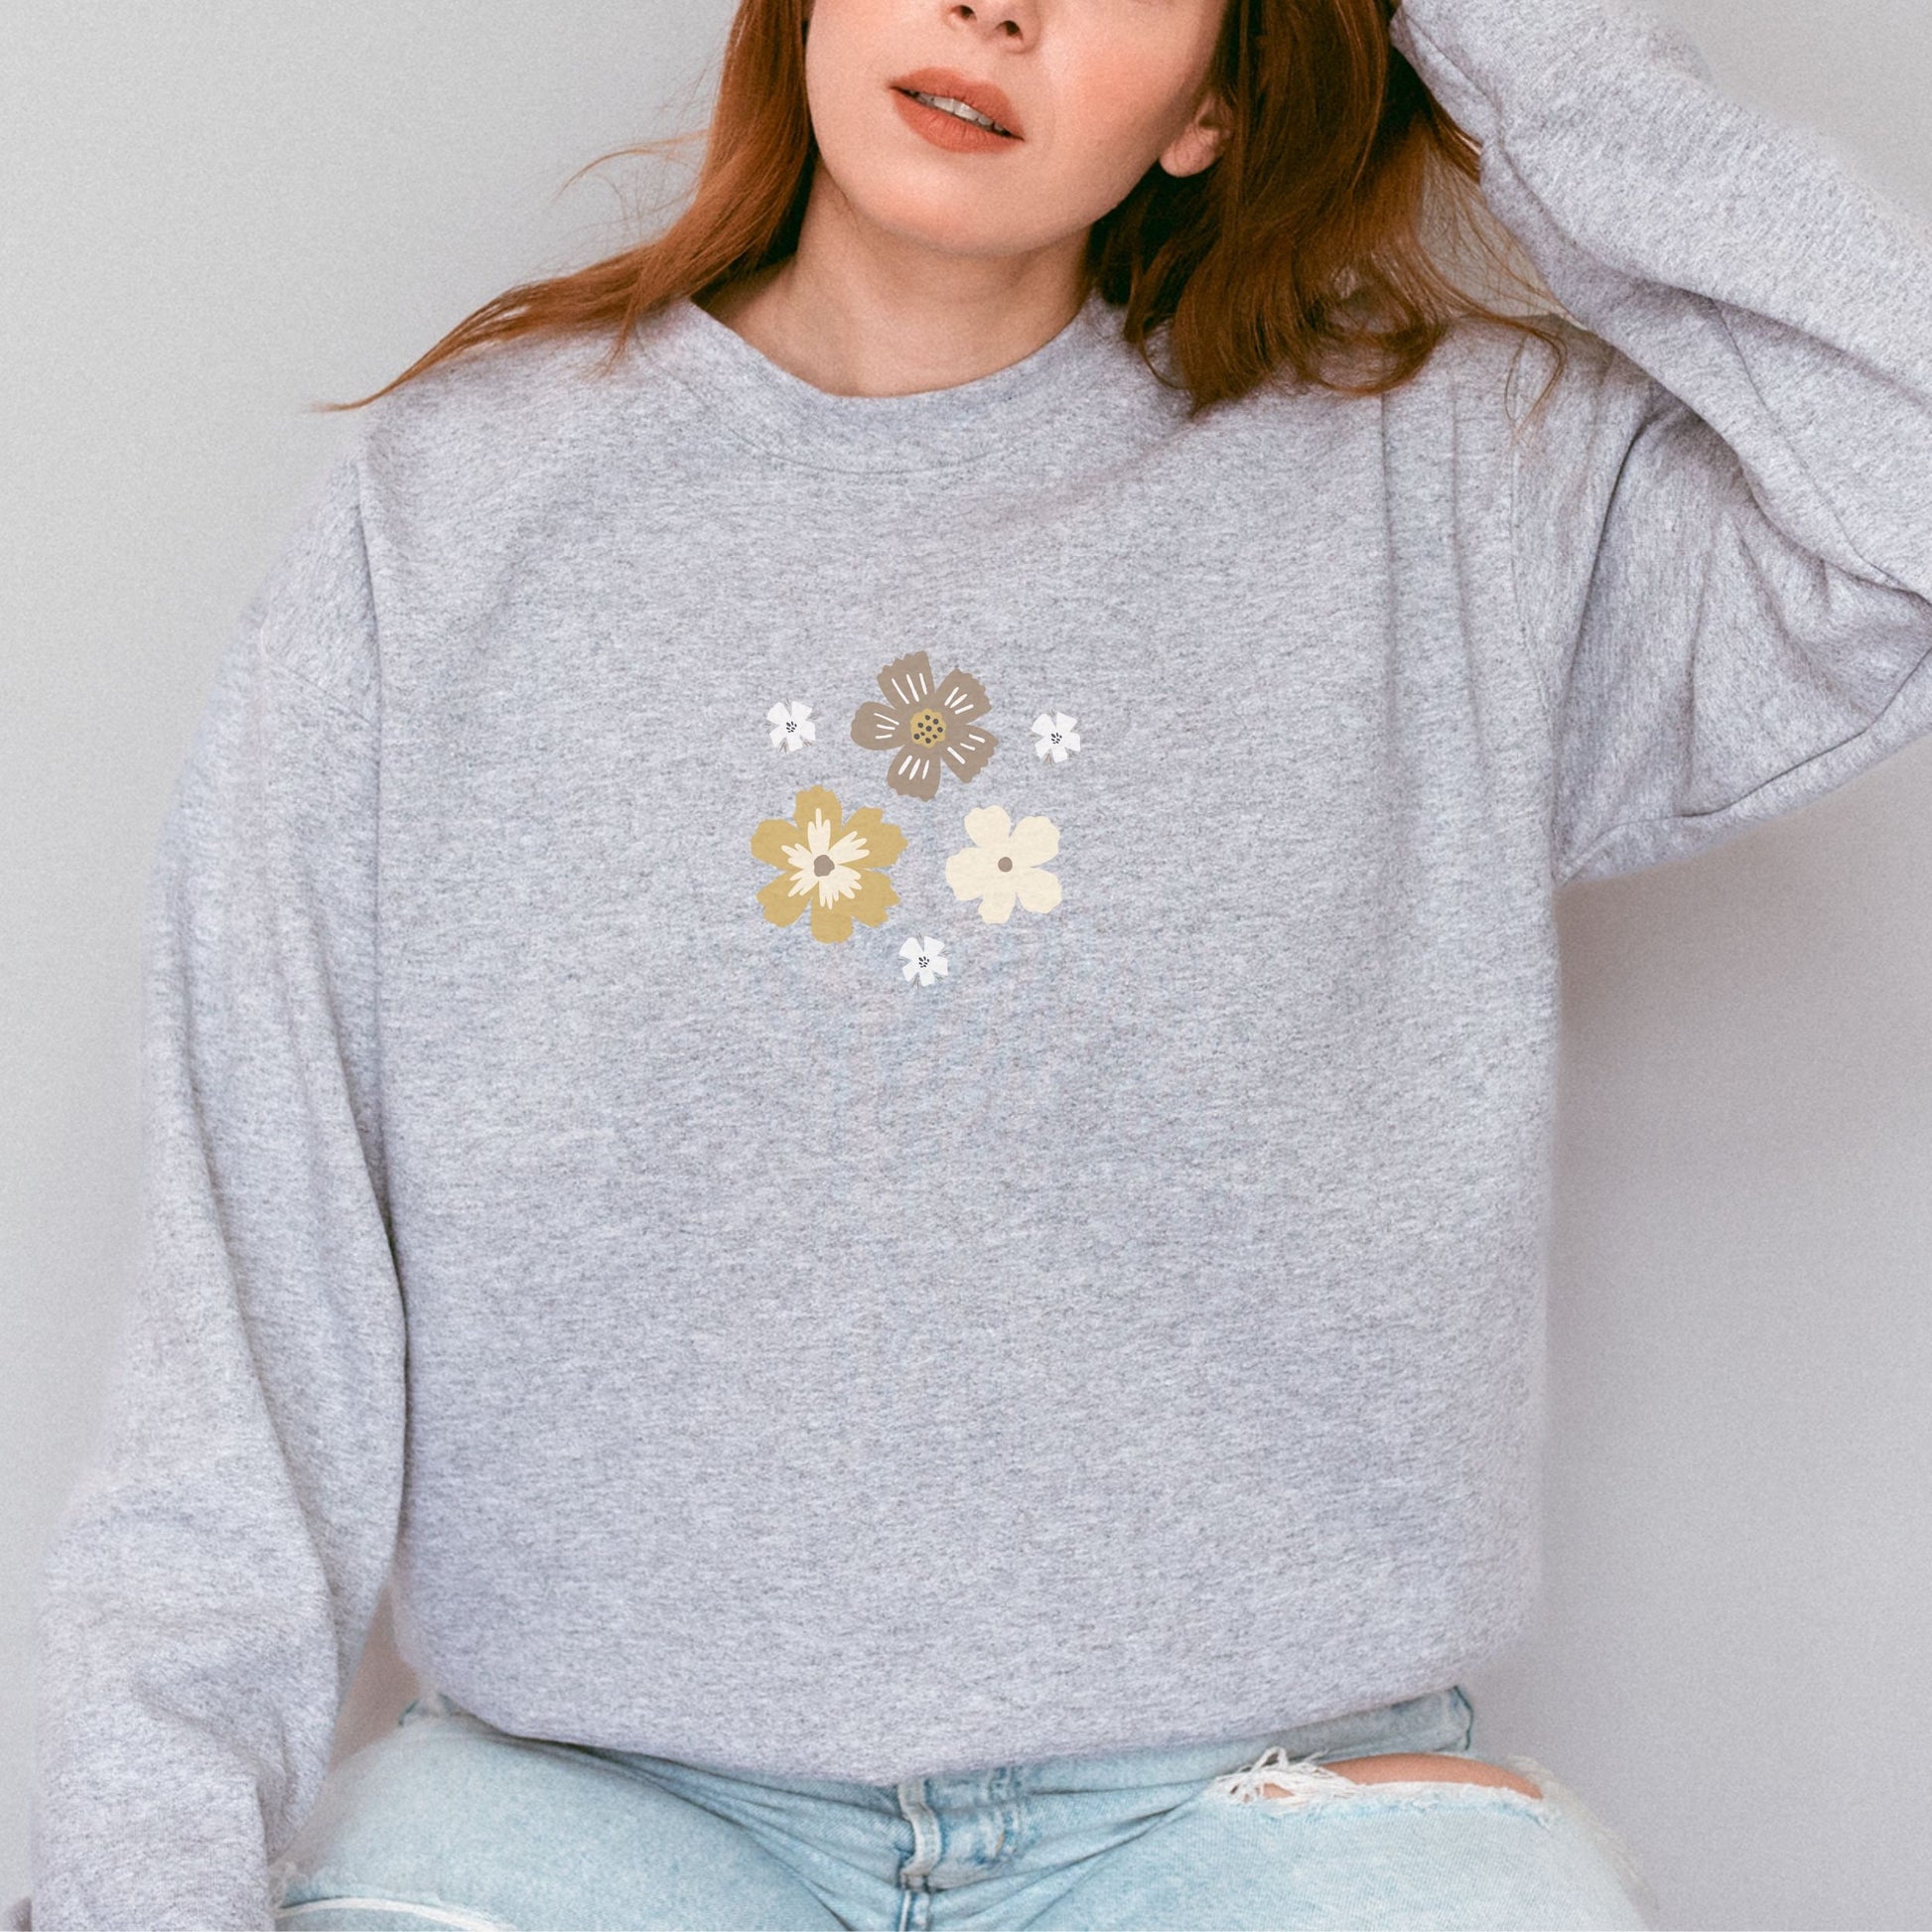 Minimalist Flower Sweatshirt, Vanilla Girl Sweatshirt Beige Clothes Clean Girl Aesthetic Teenage Girl Gifts Preppy Aesthetic Clothes